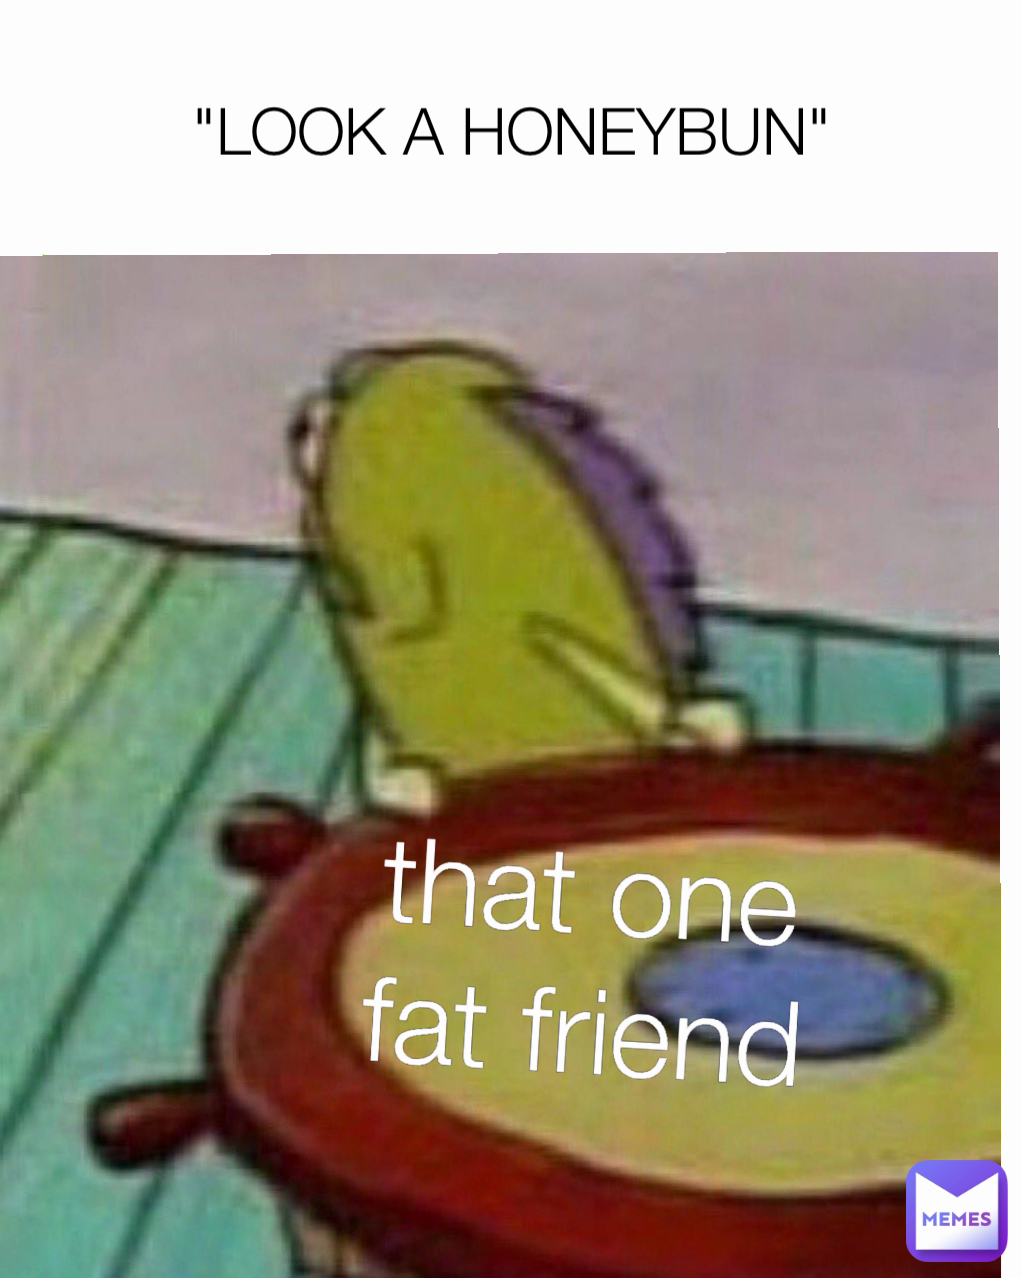 that one fat friend "LOOK A HONEYBUN"